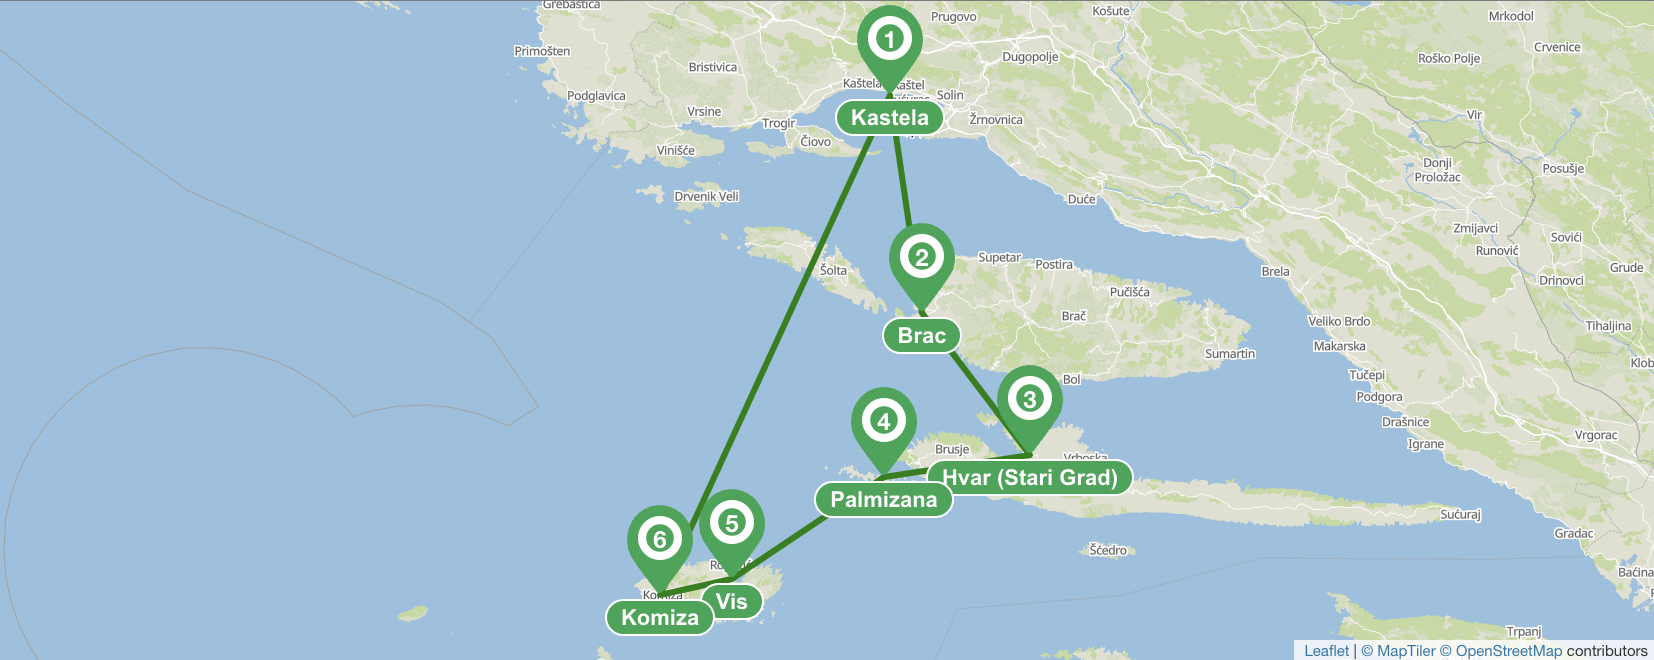 Яхтенный маршрут из Сплита  на юг - 7 дней